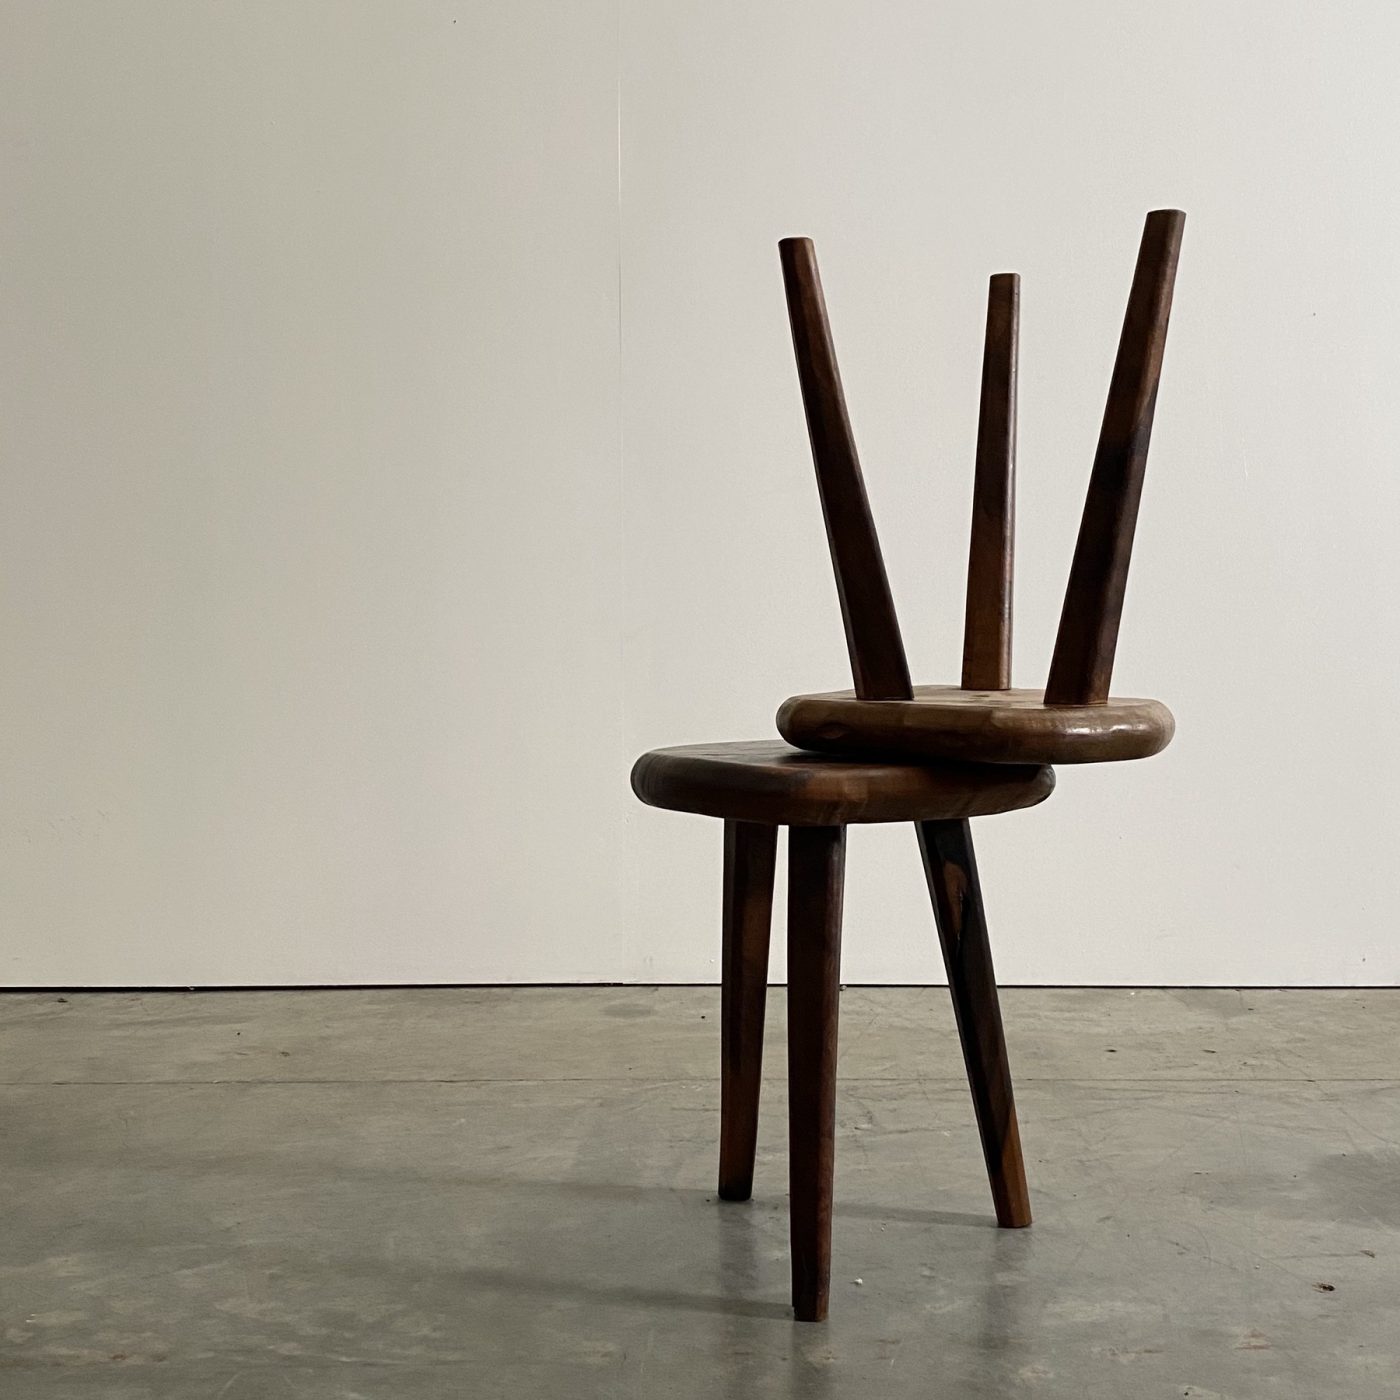 objet-vagabond-olive-stools0000